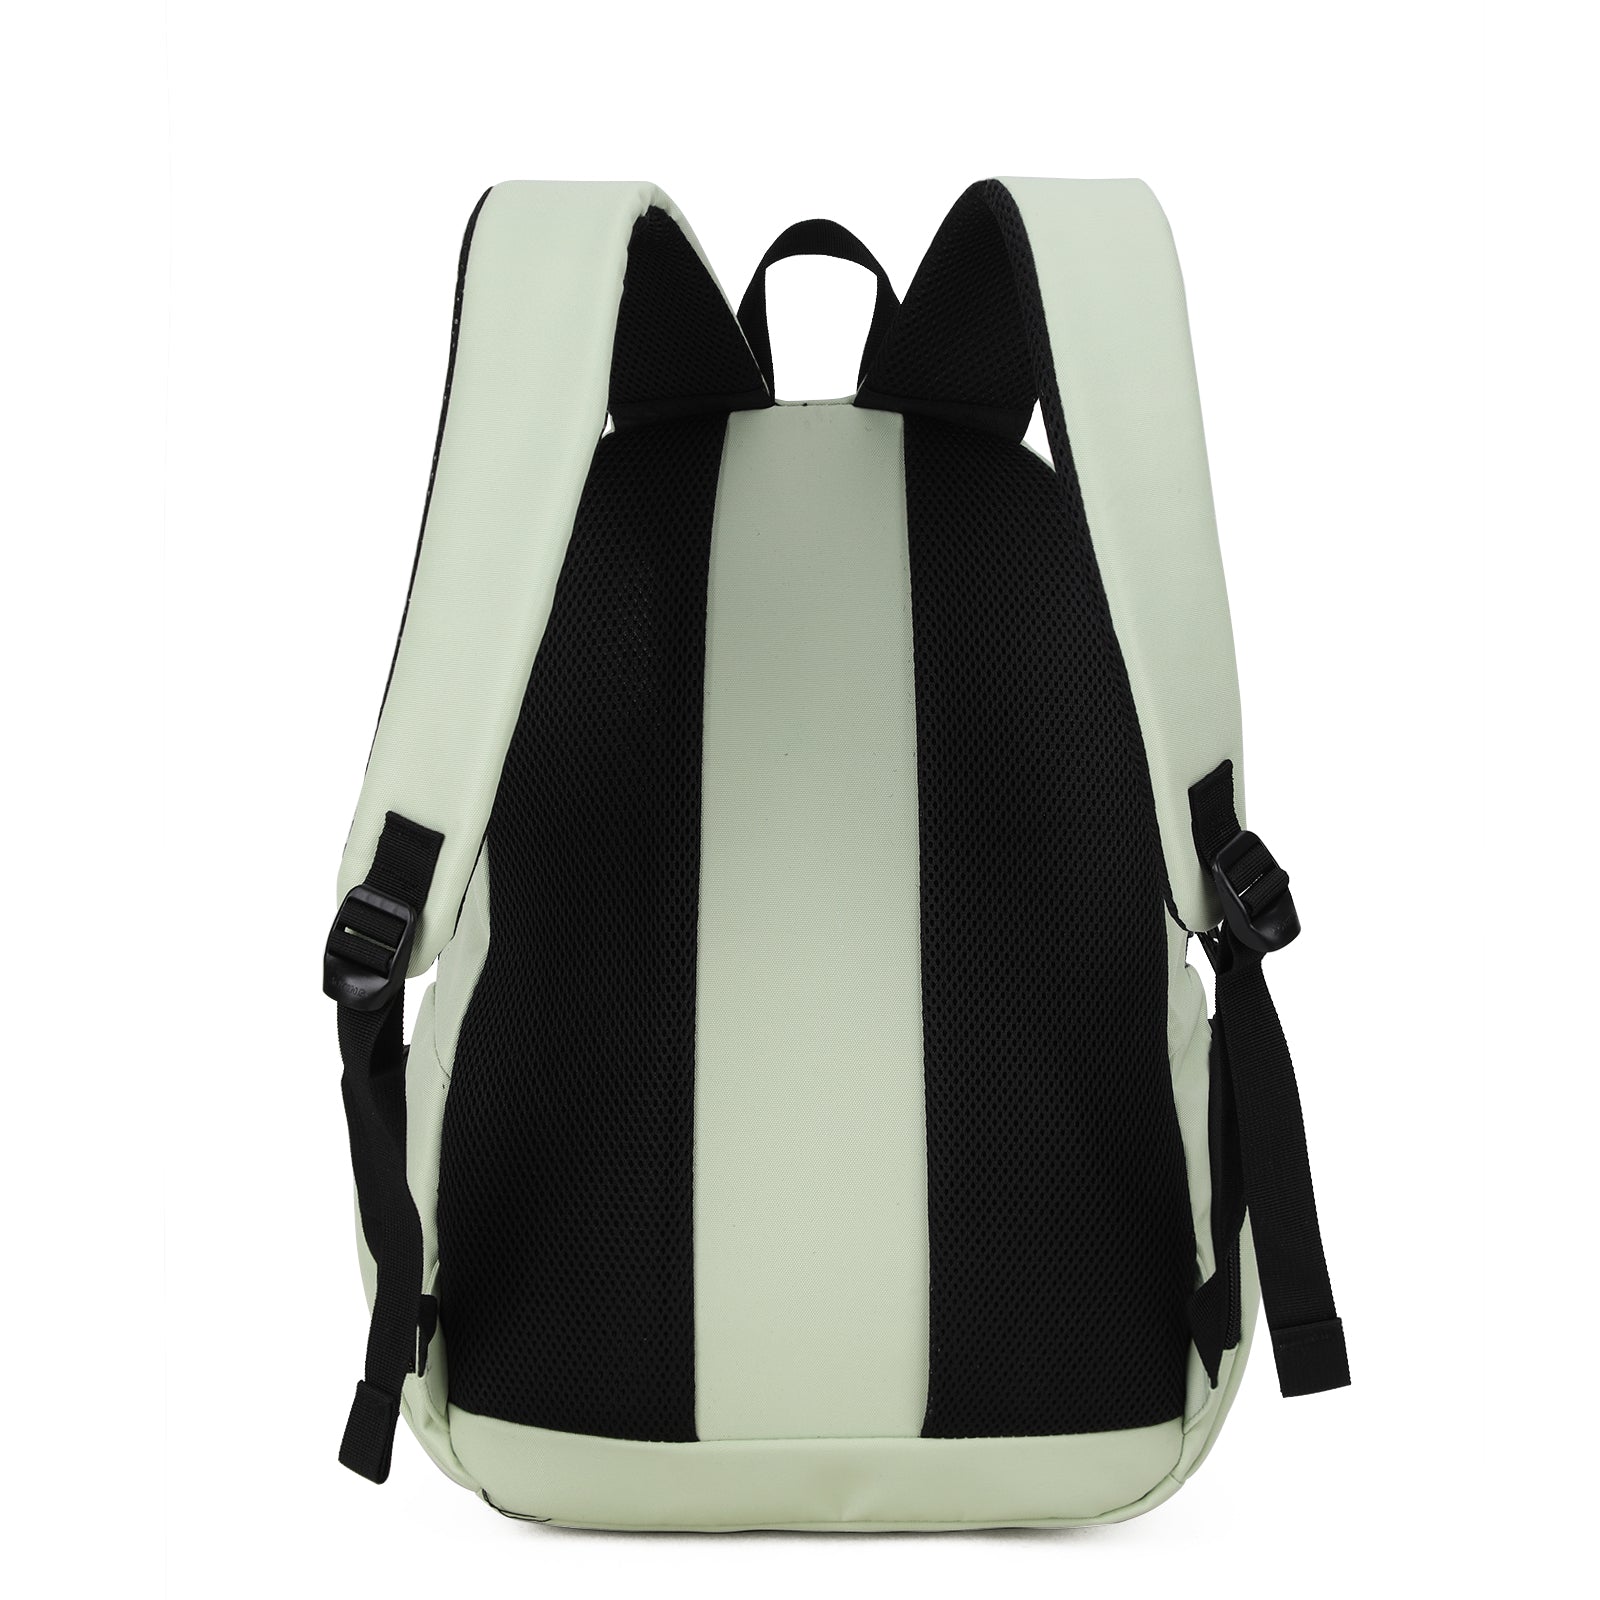 Aoking Travel Backpack XN2619 Light Green